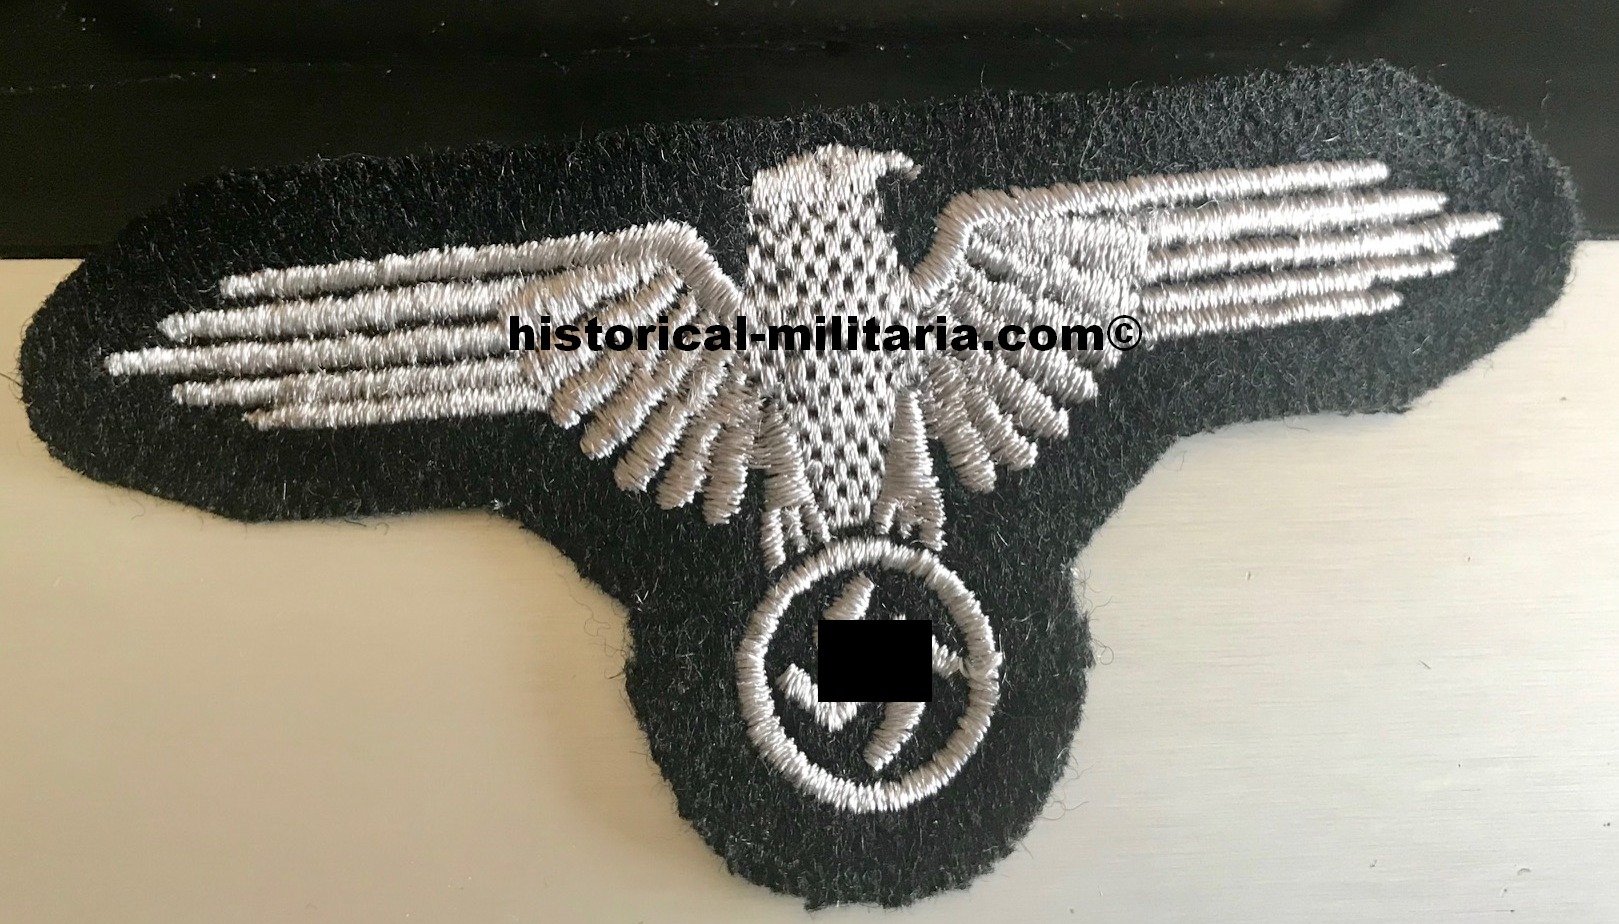 Waffen-SS EM/ NCO sleeve eagle RZM machine-embroidered in greyish silver cotton threads - Maschinengestickter SS Ärmeladler Mannschaften - Aquila SS da braccio per le truppe delle Waffen-SS